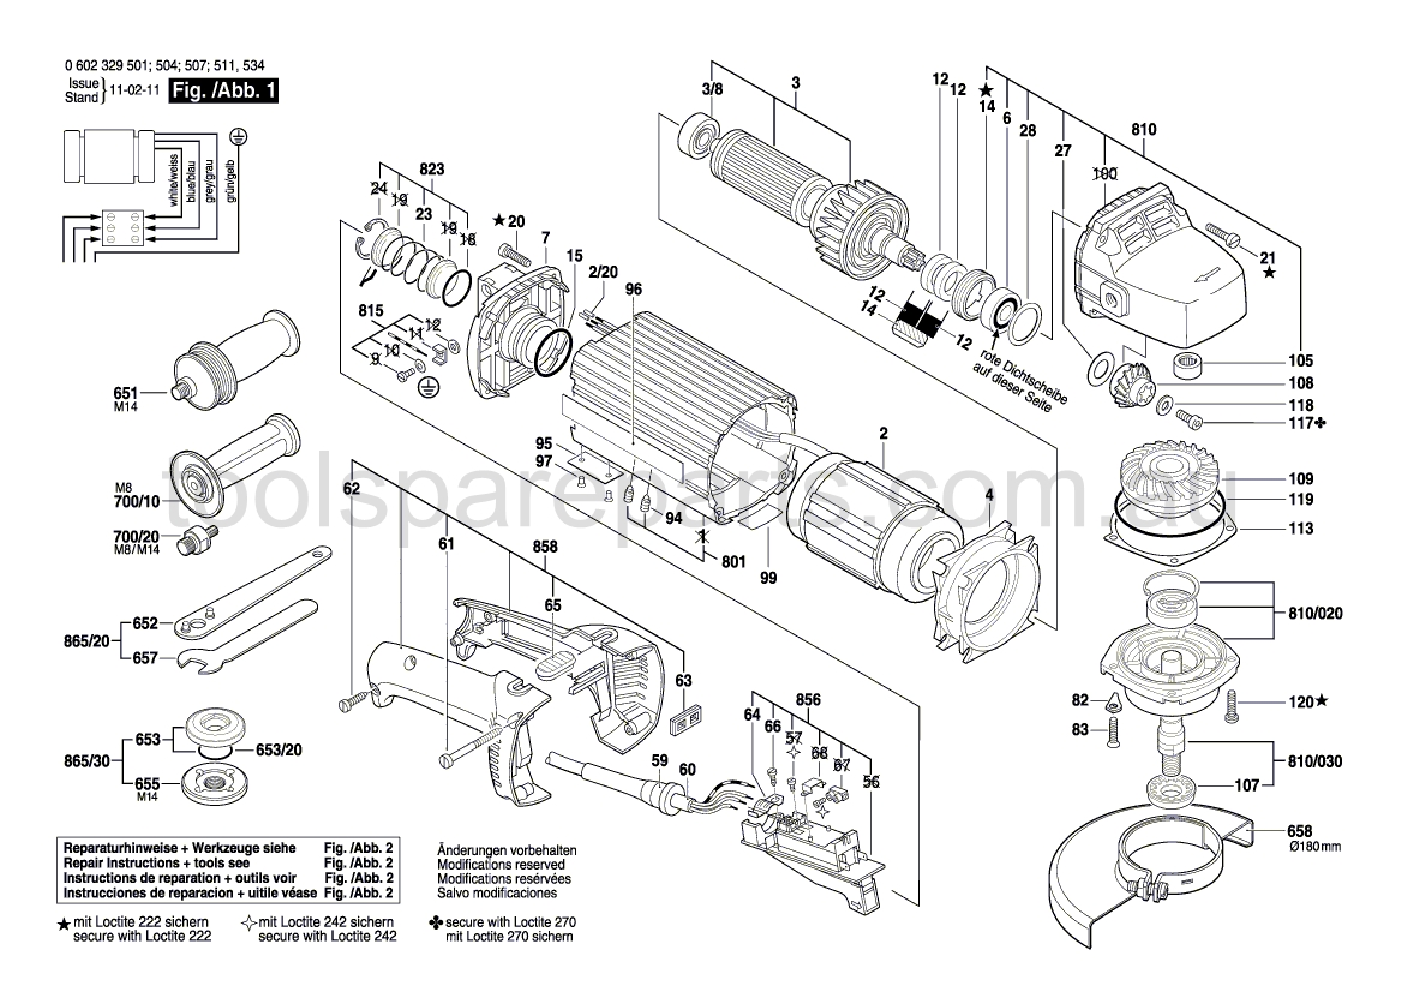 Bosch HWS 85/180 0602329534  Diagram 1